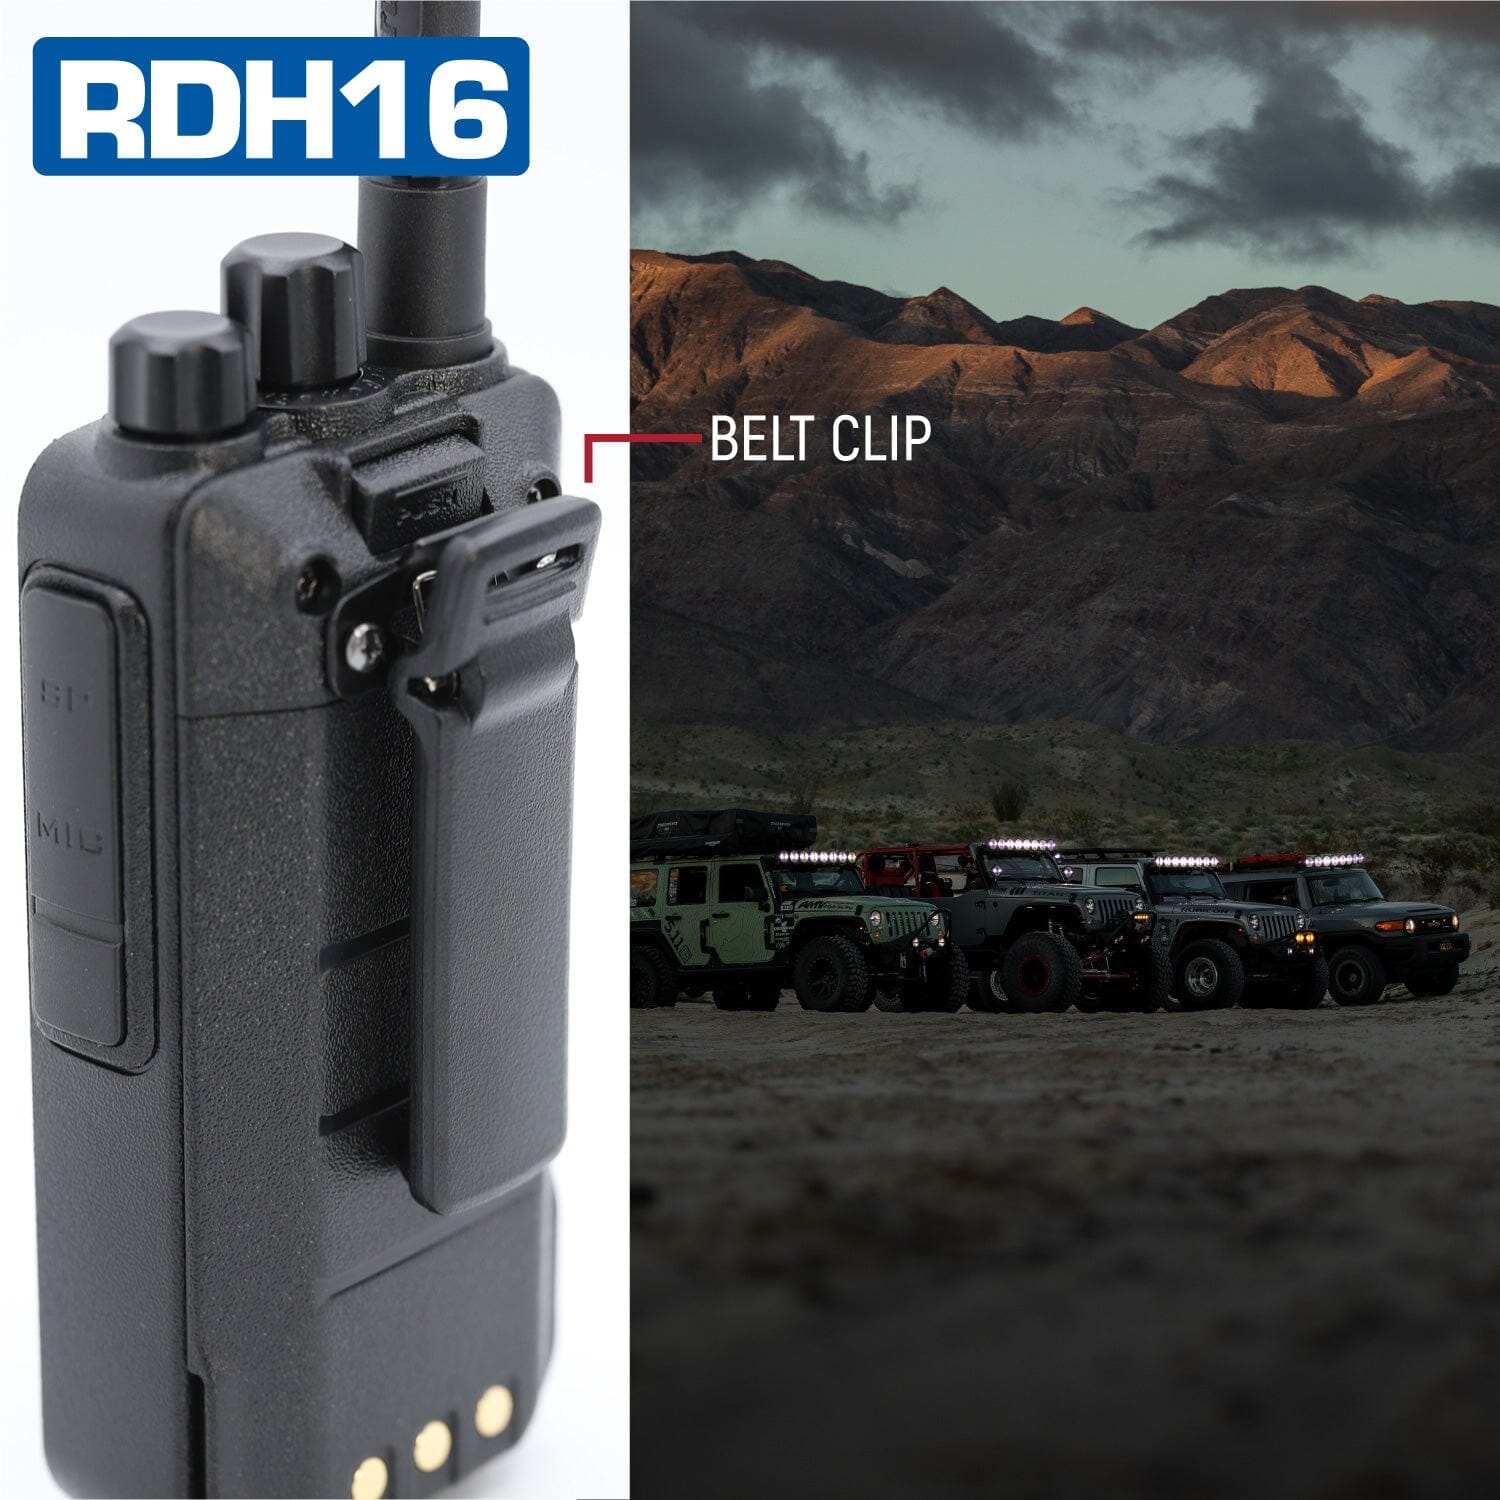 Rugged RDH16 VHF Digital and Analog Handheld Radio - Demo - Clearance